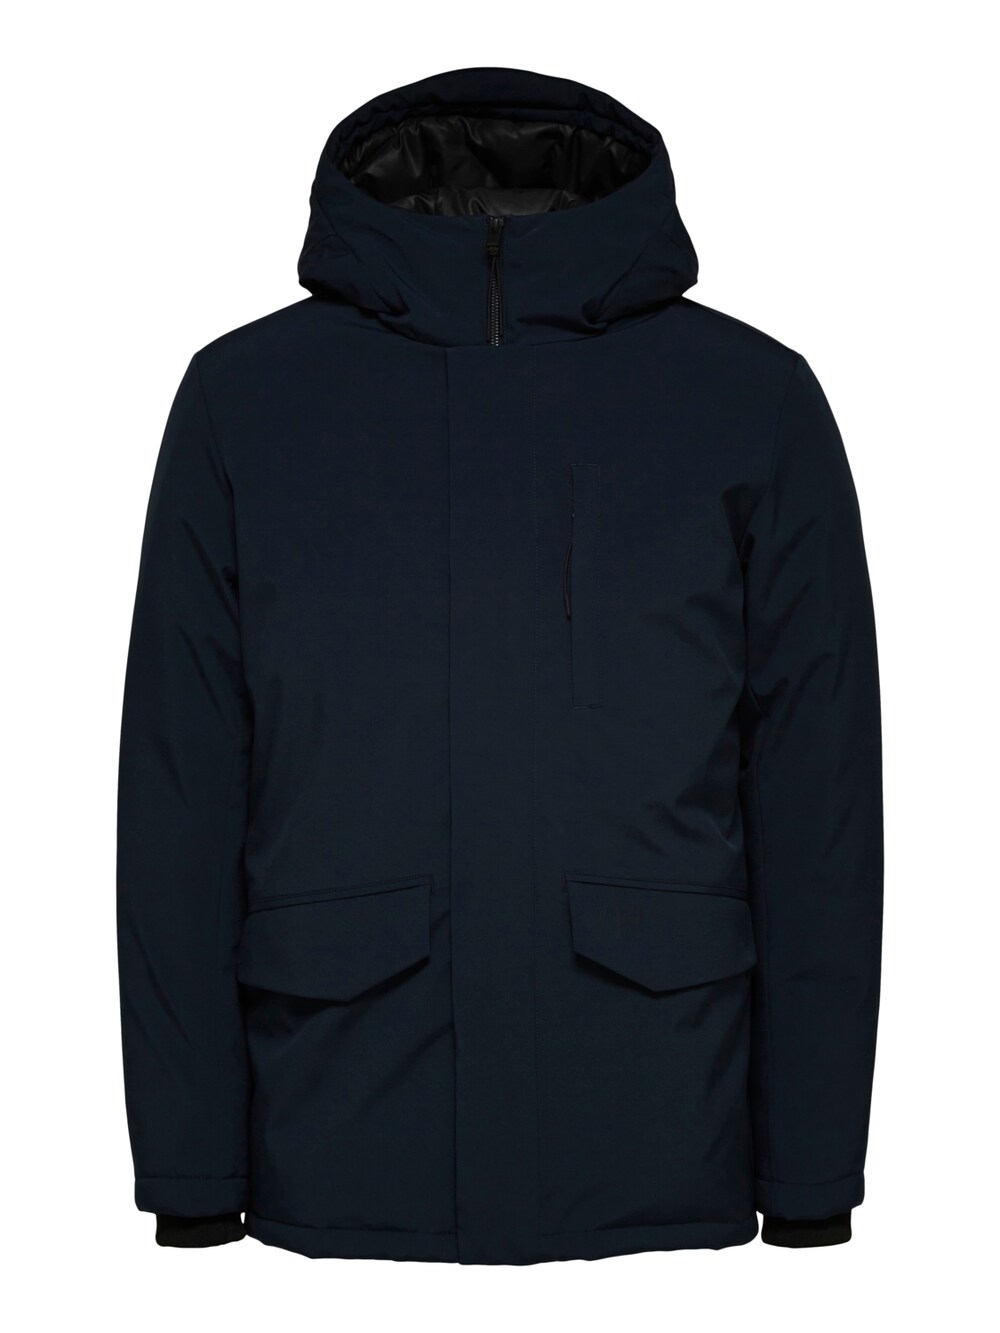 Зимняя куртка SELECTED HOMME, темно-синий зимняя куртка selected homme темно синий